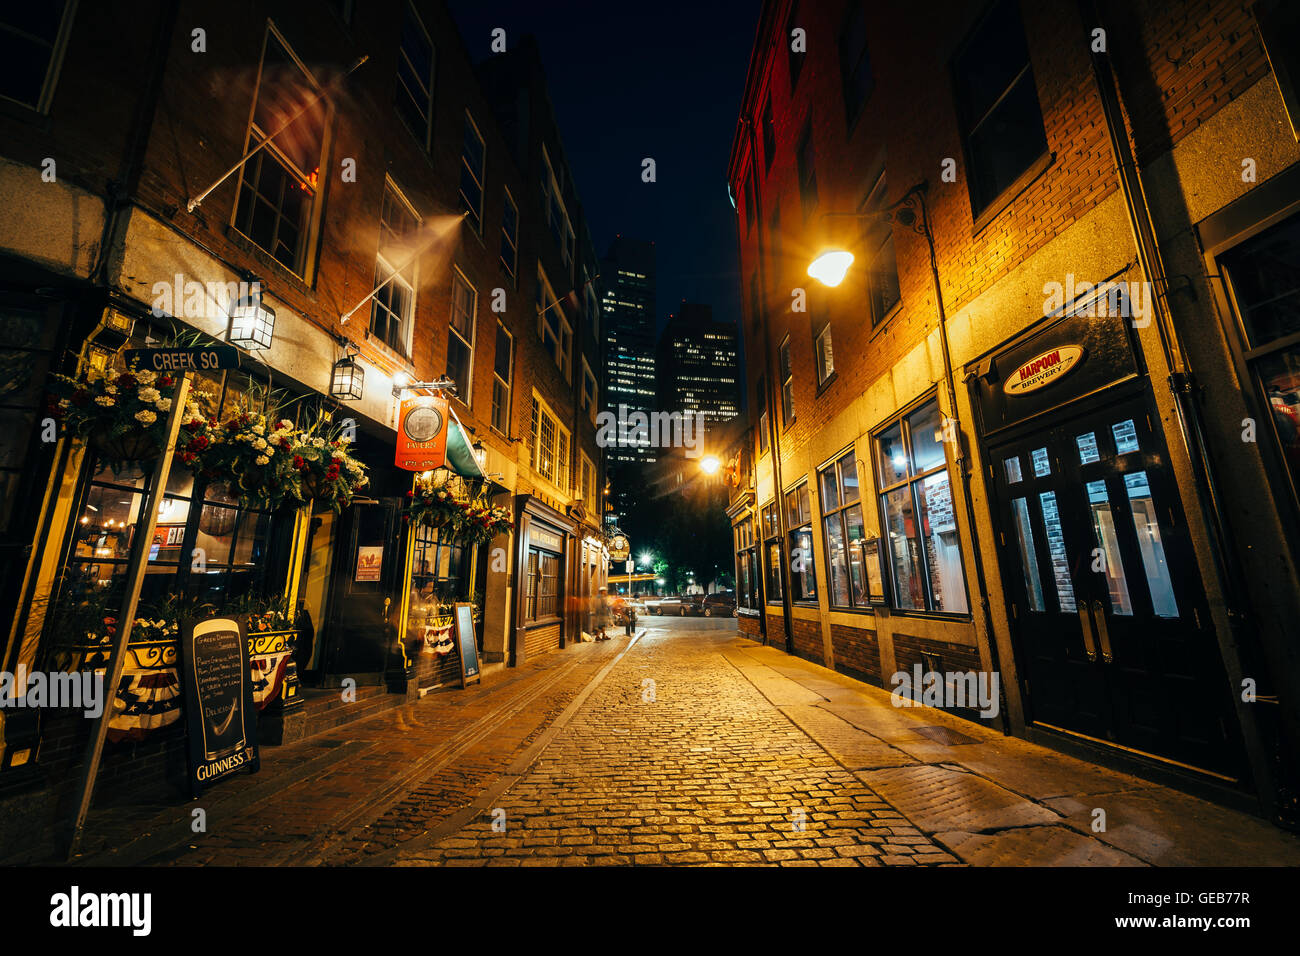 The beautiful cobblestone Marshall Street at night, in Boston, Massachusetts. Stock Photo